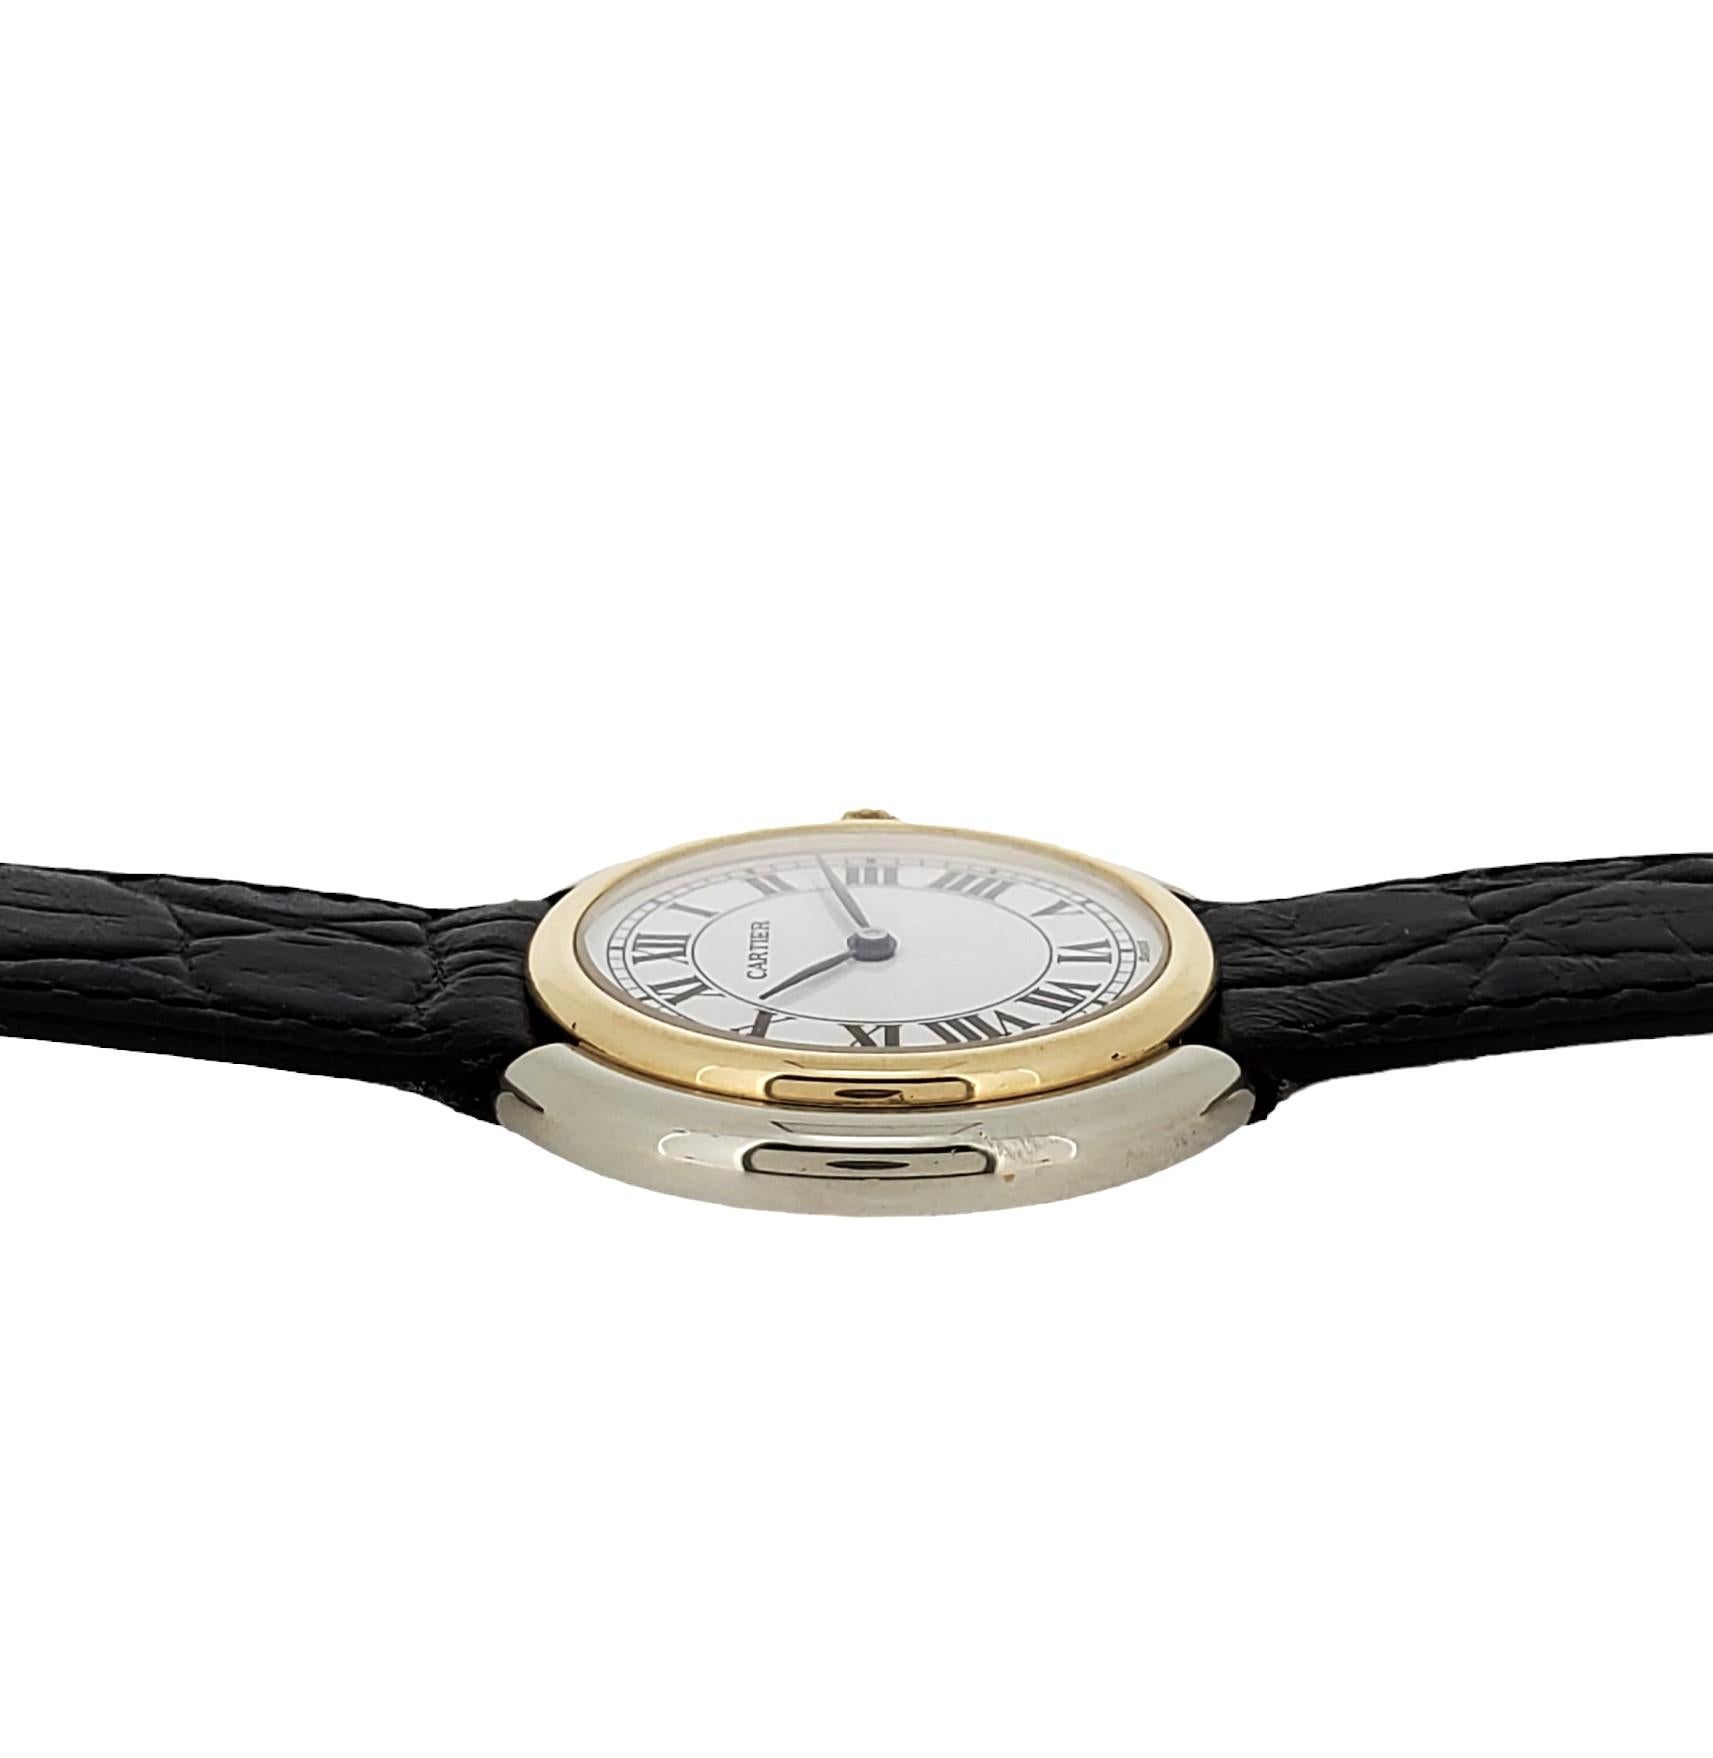 Cartier Paris Vendome 2-Tone Large Watch 34mm, Manual wind, Circa. 1973-1976 For Sale 2